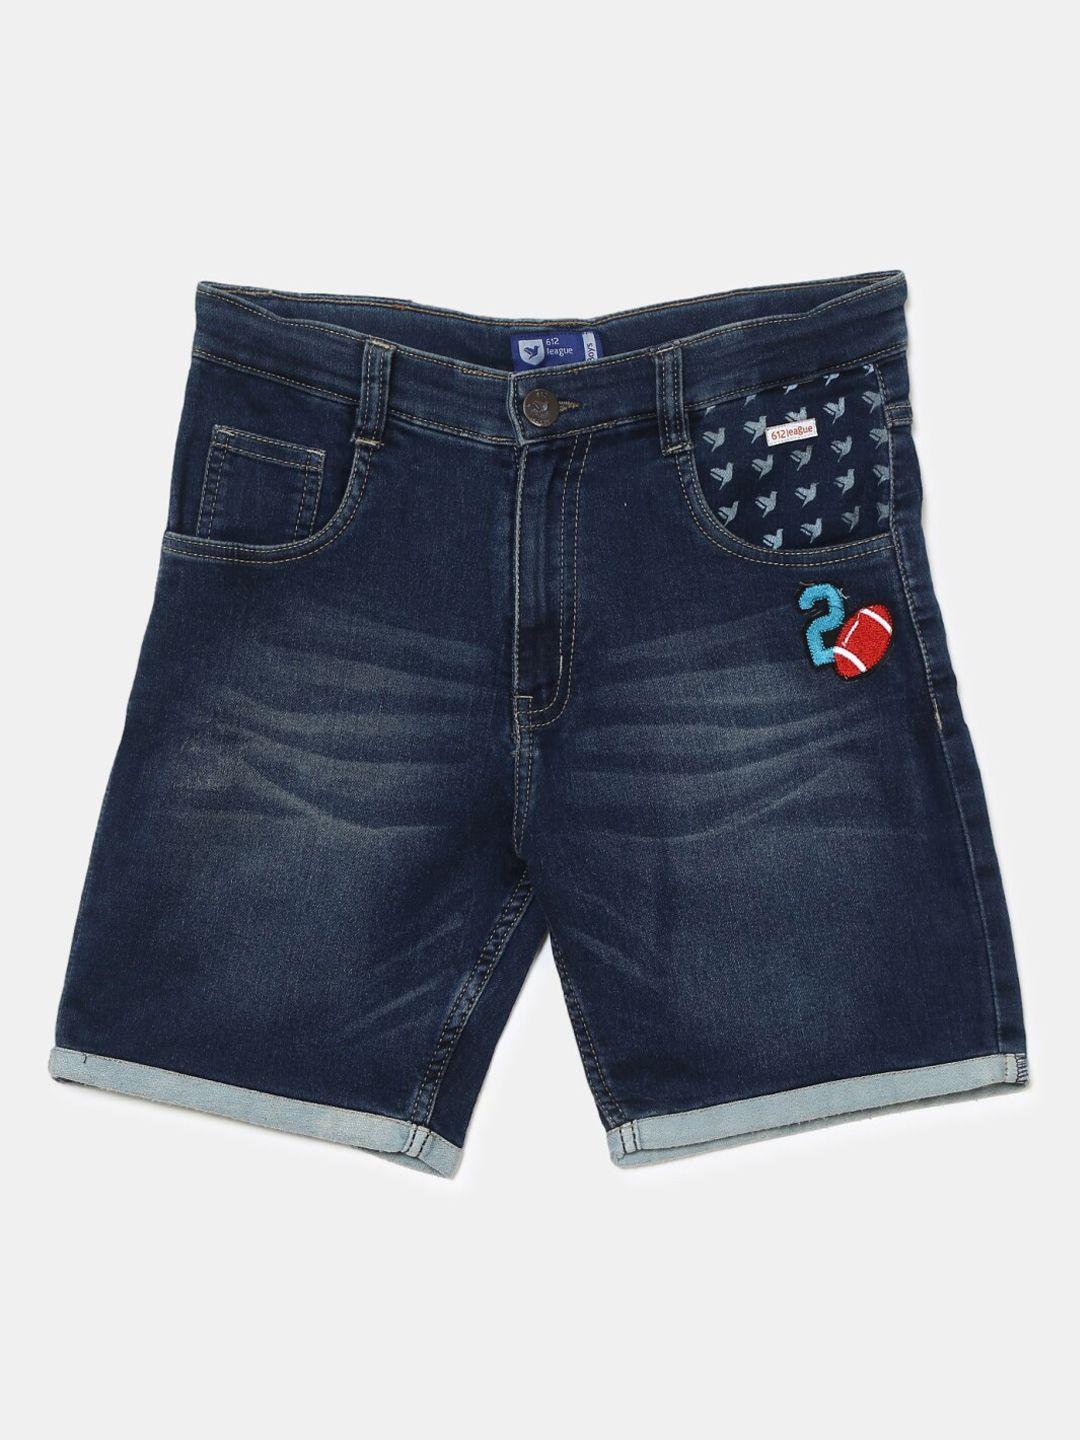 v-mart boys navy blue washed washed outdoor denim shorts